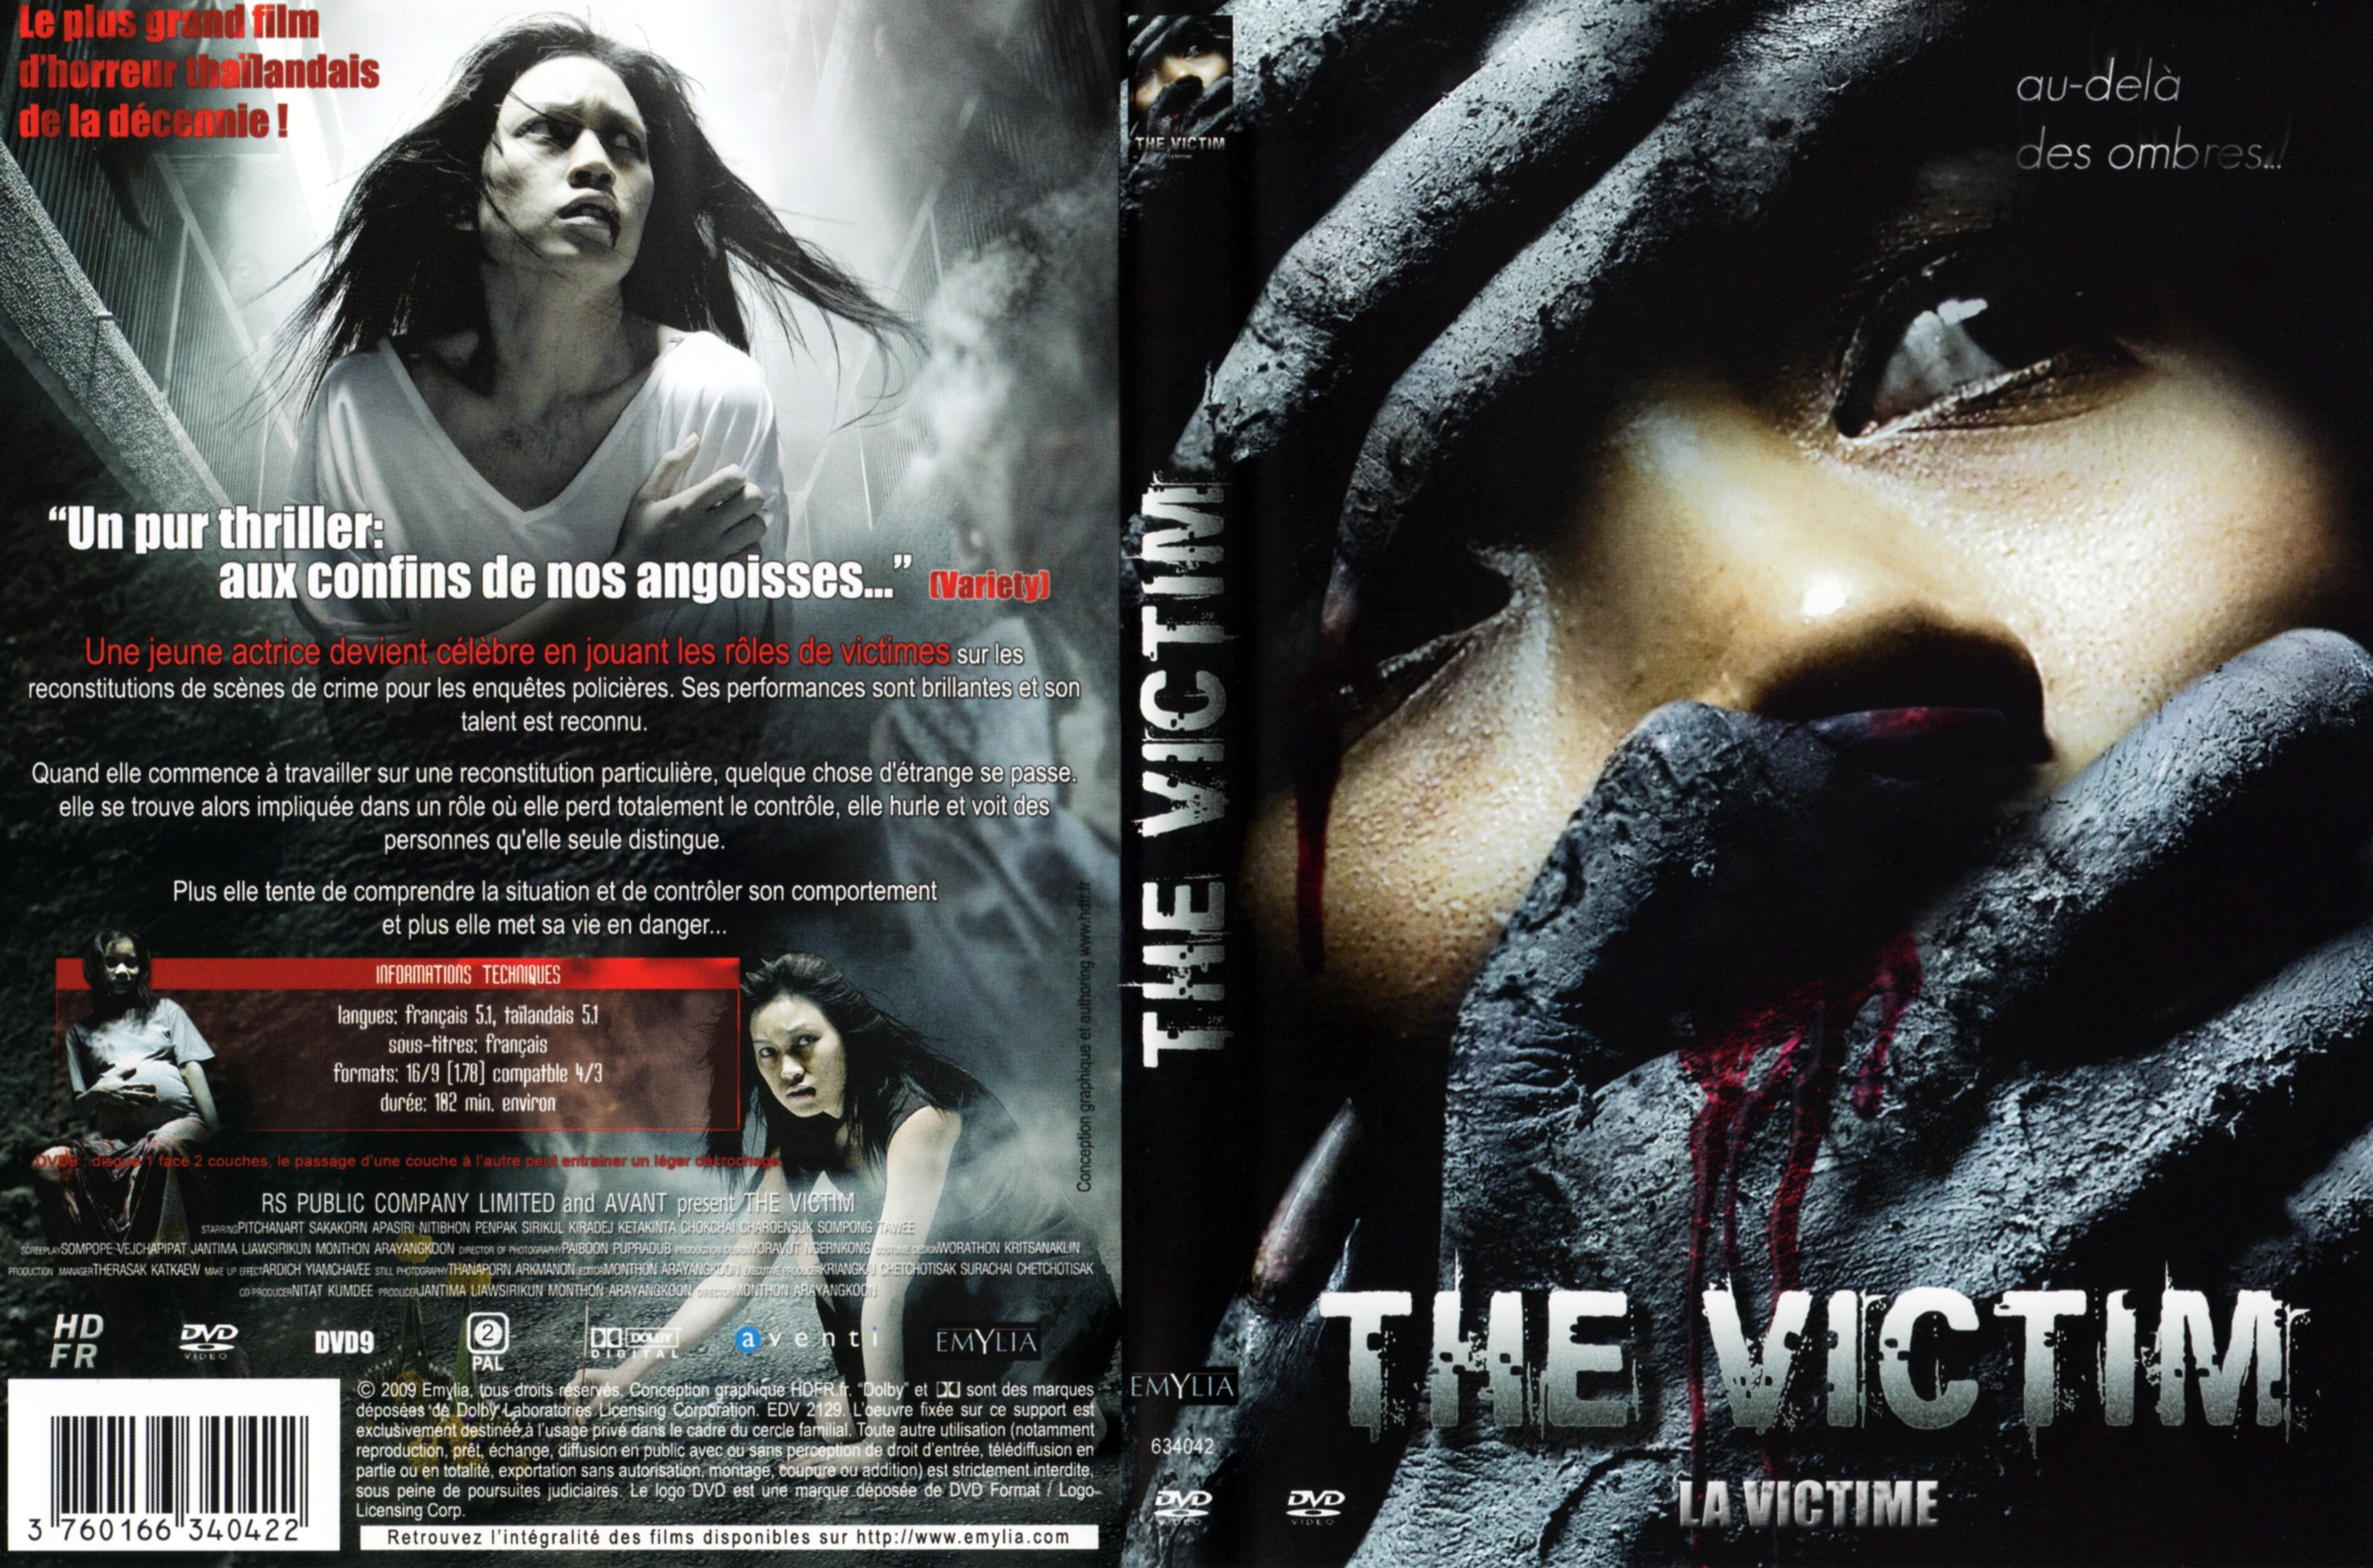 Jaquette DVD The victim